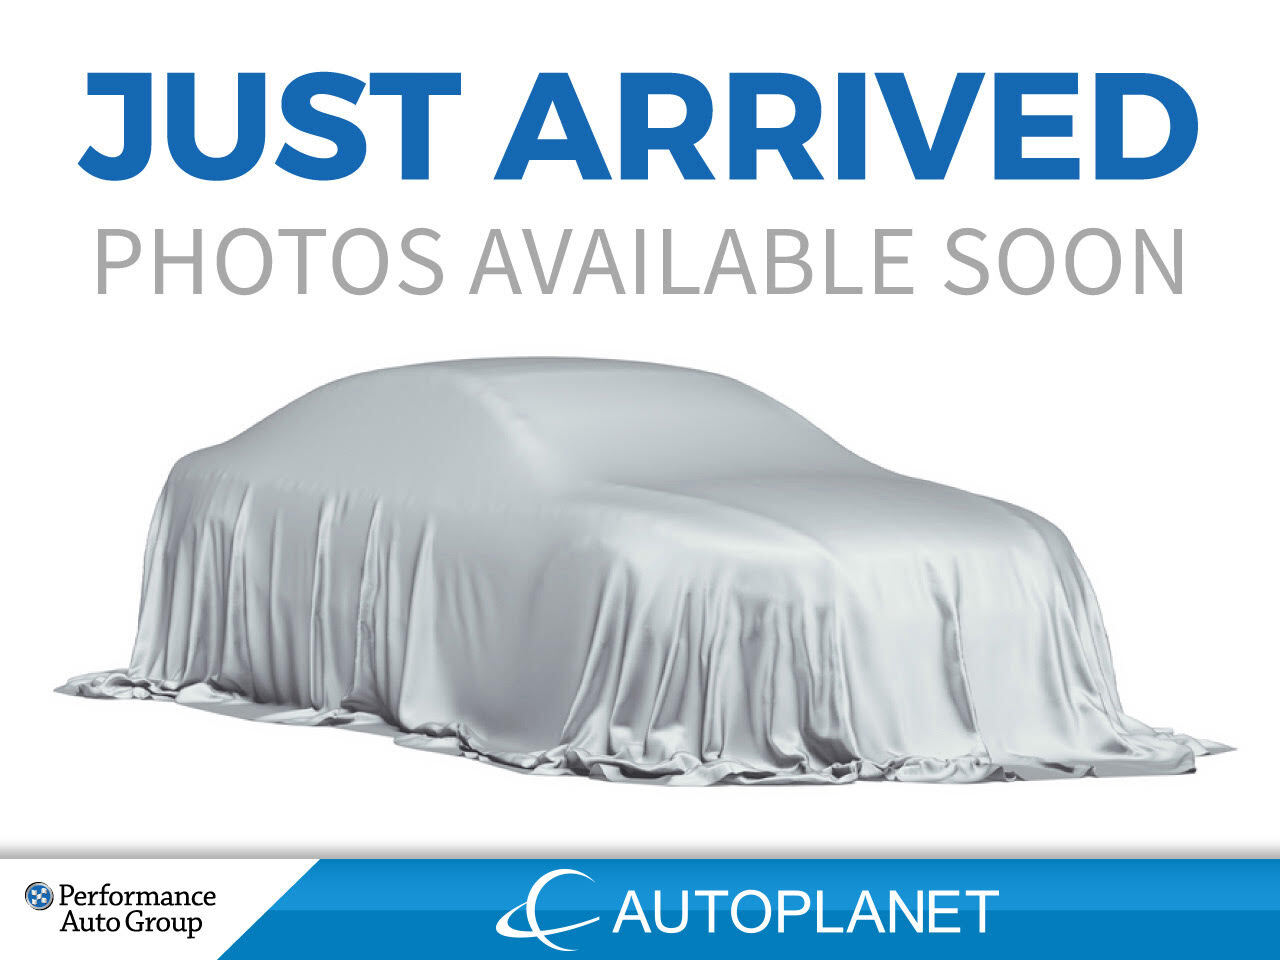 2022 Chevrolet Silverado 1500 LTD 1500 4x4, Crew Cab 157", Apple CarPlay, Bluetooth!